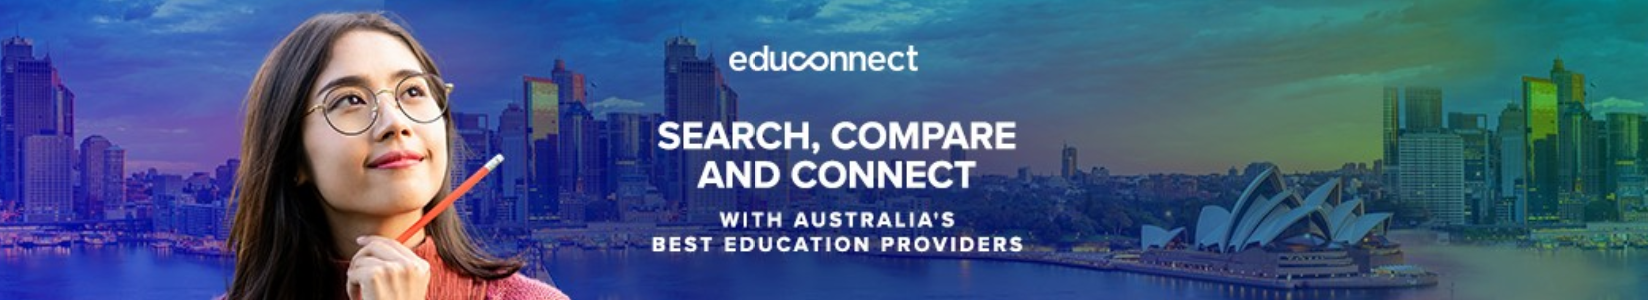 educonnect2